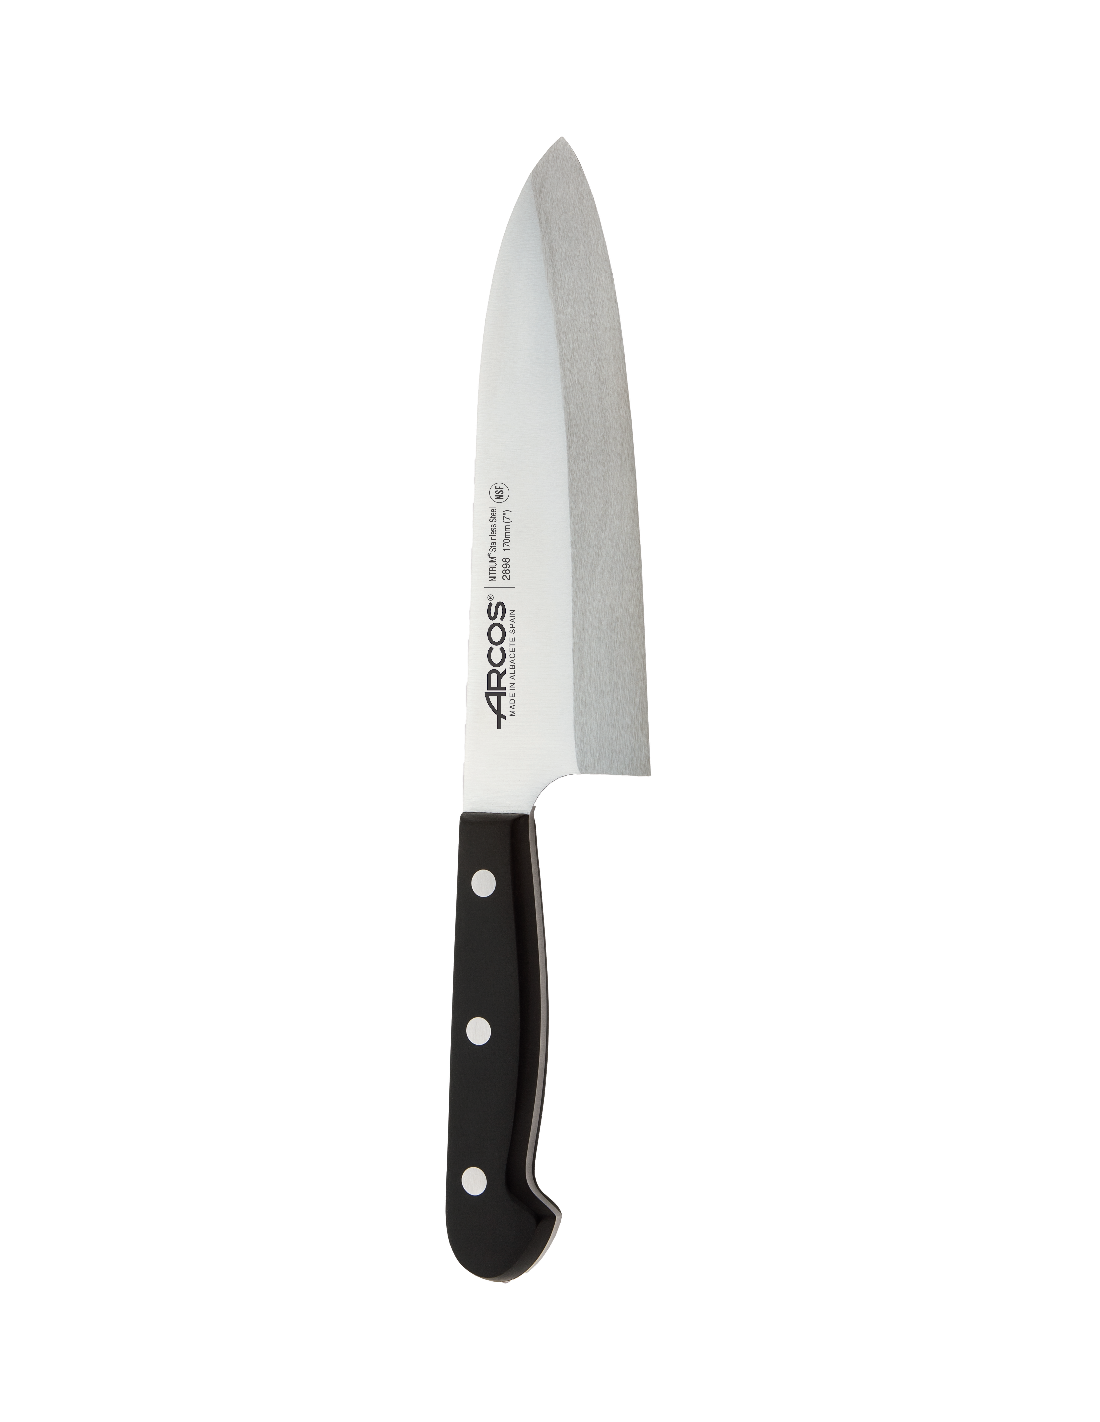 Cuchillo de Cocina Jamonero ARCOS Manhattan (25 cm)